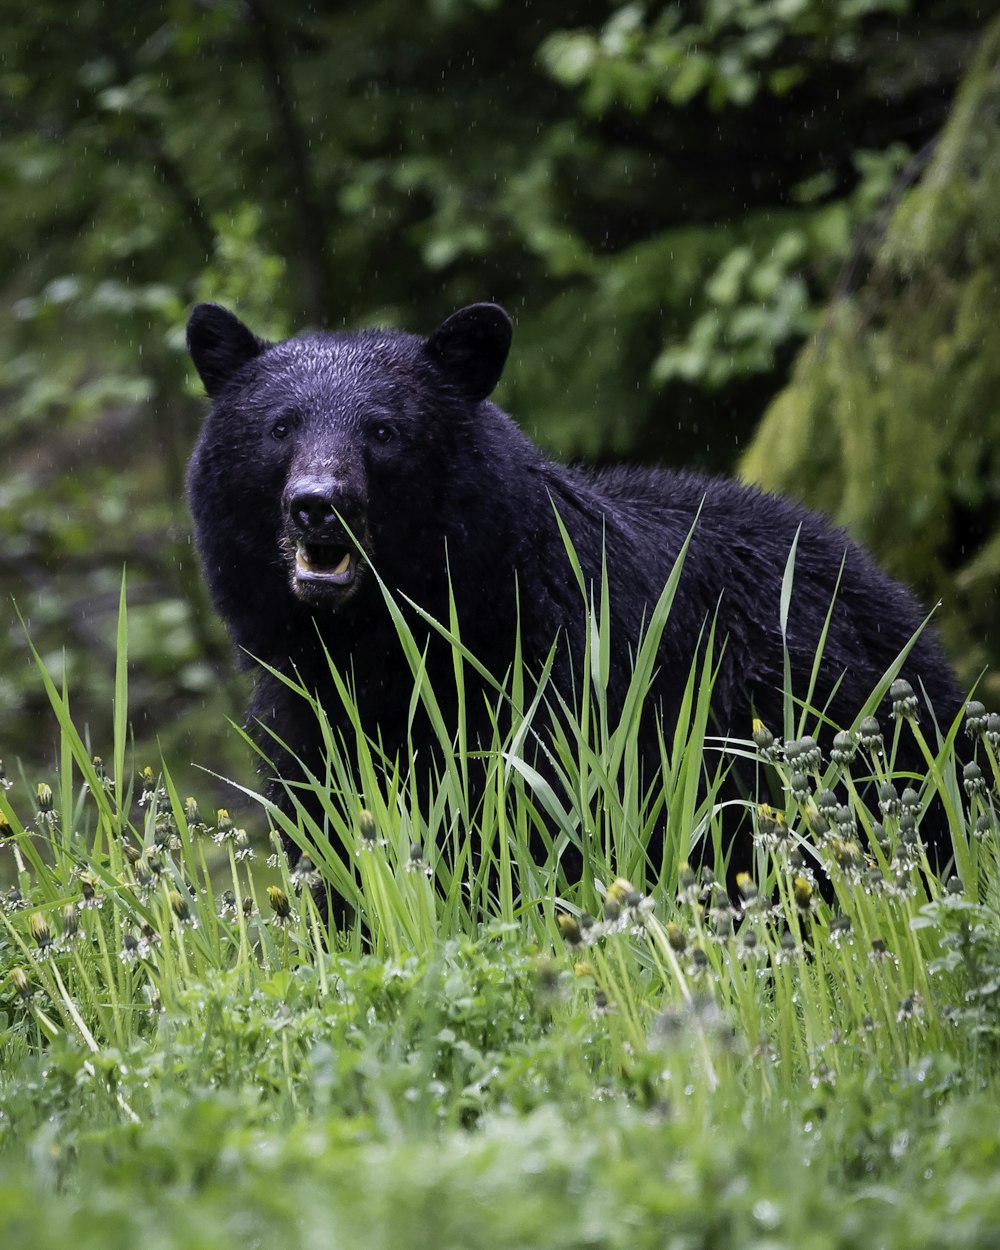 black bear on green grass during daytime